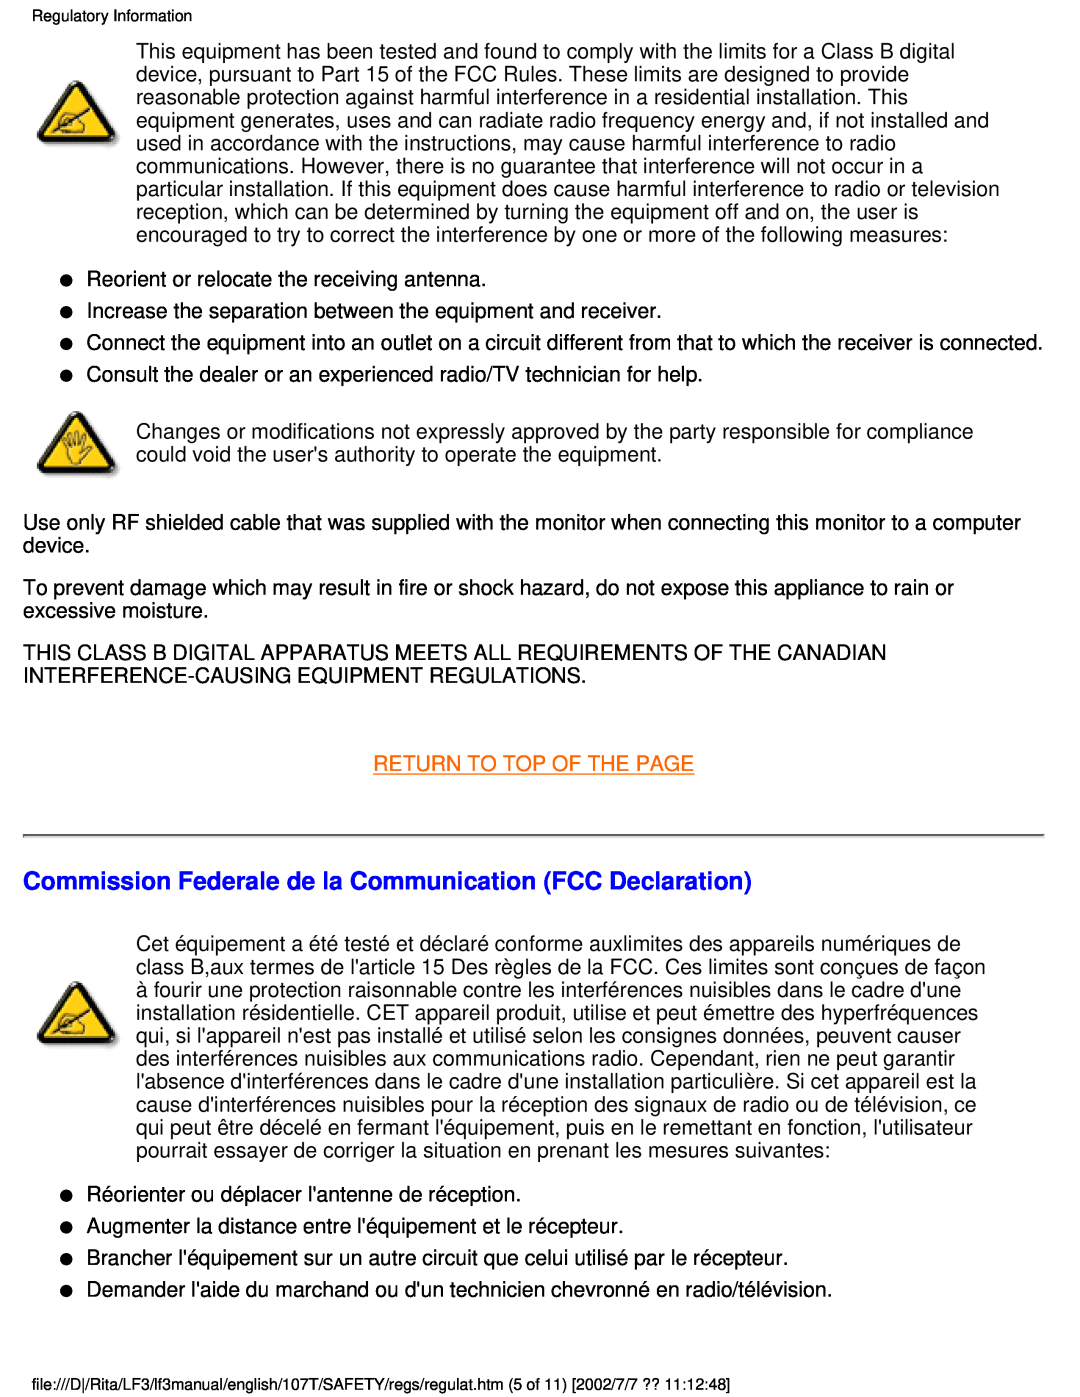 Philips 107T41 user manual Commission Federale de la Communication FCC Declaration, Return To Top Of The Page 